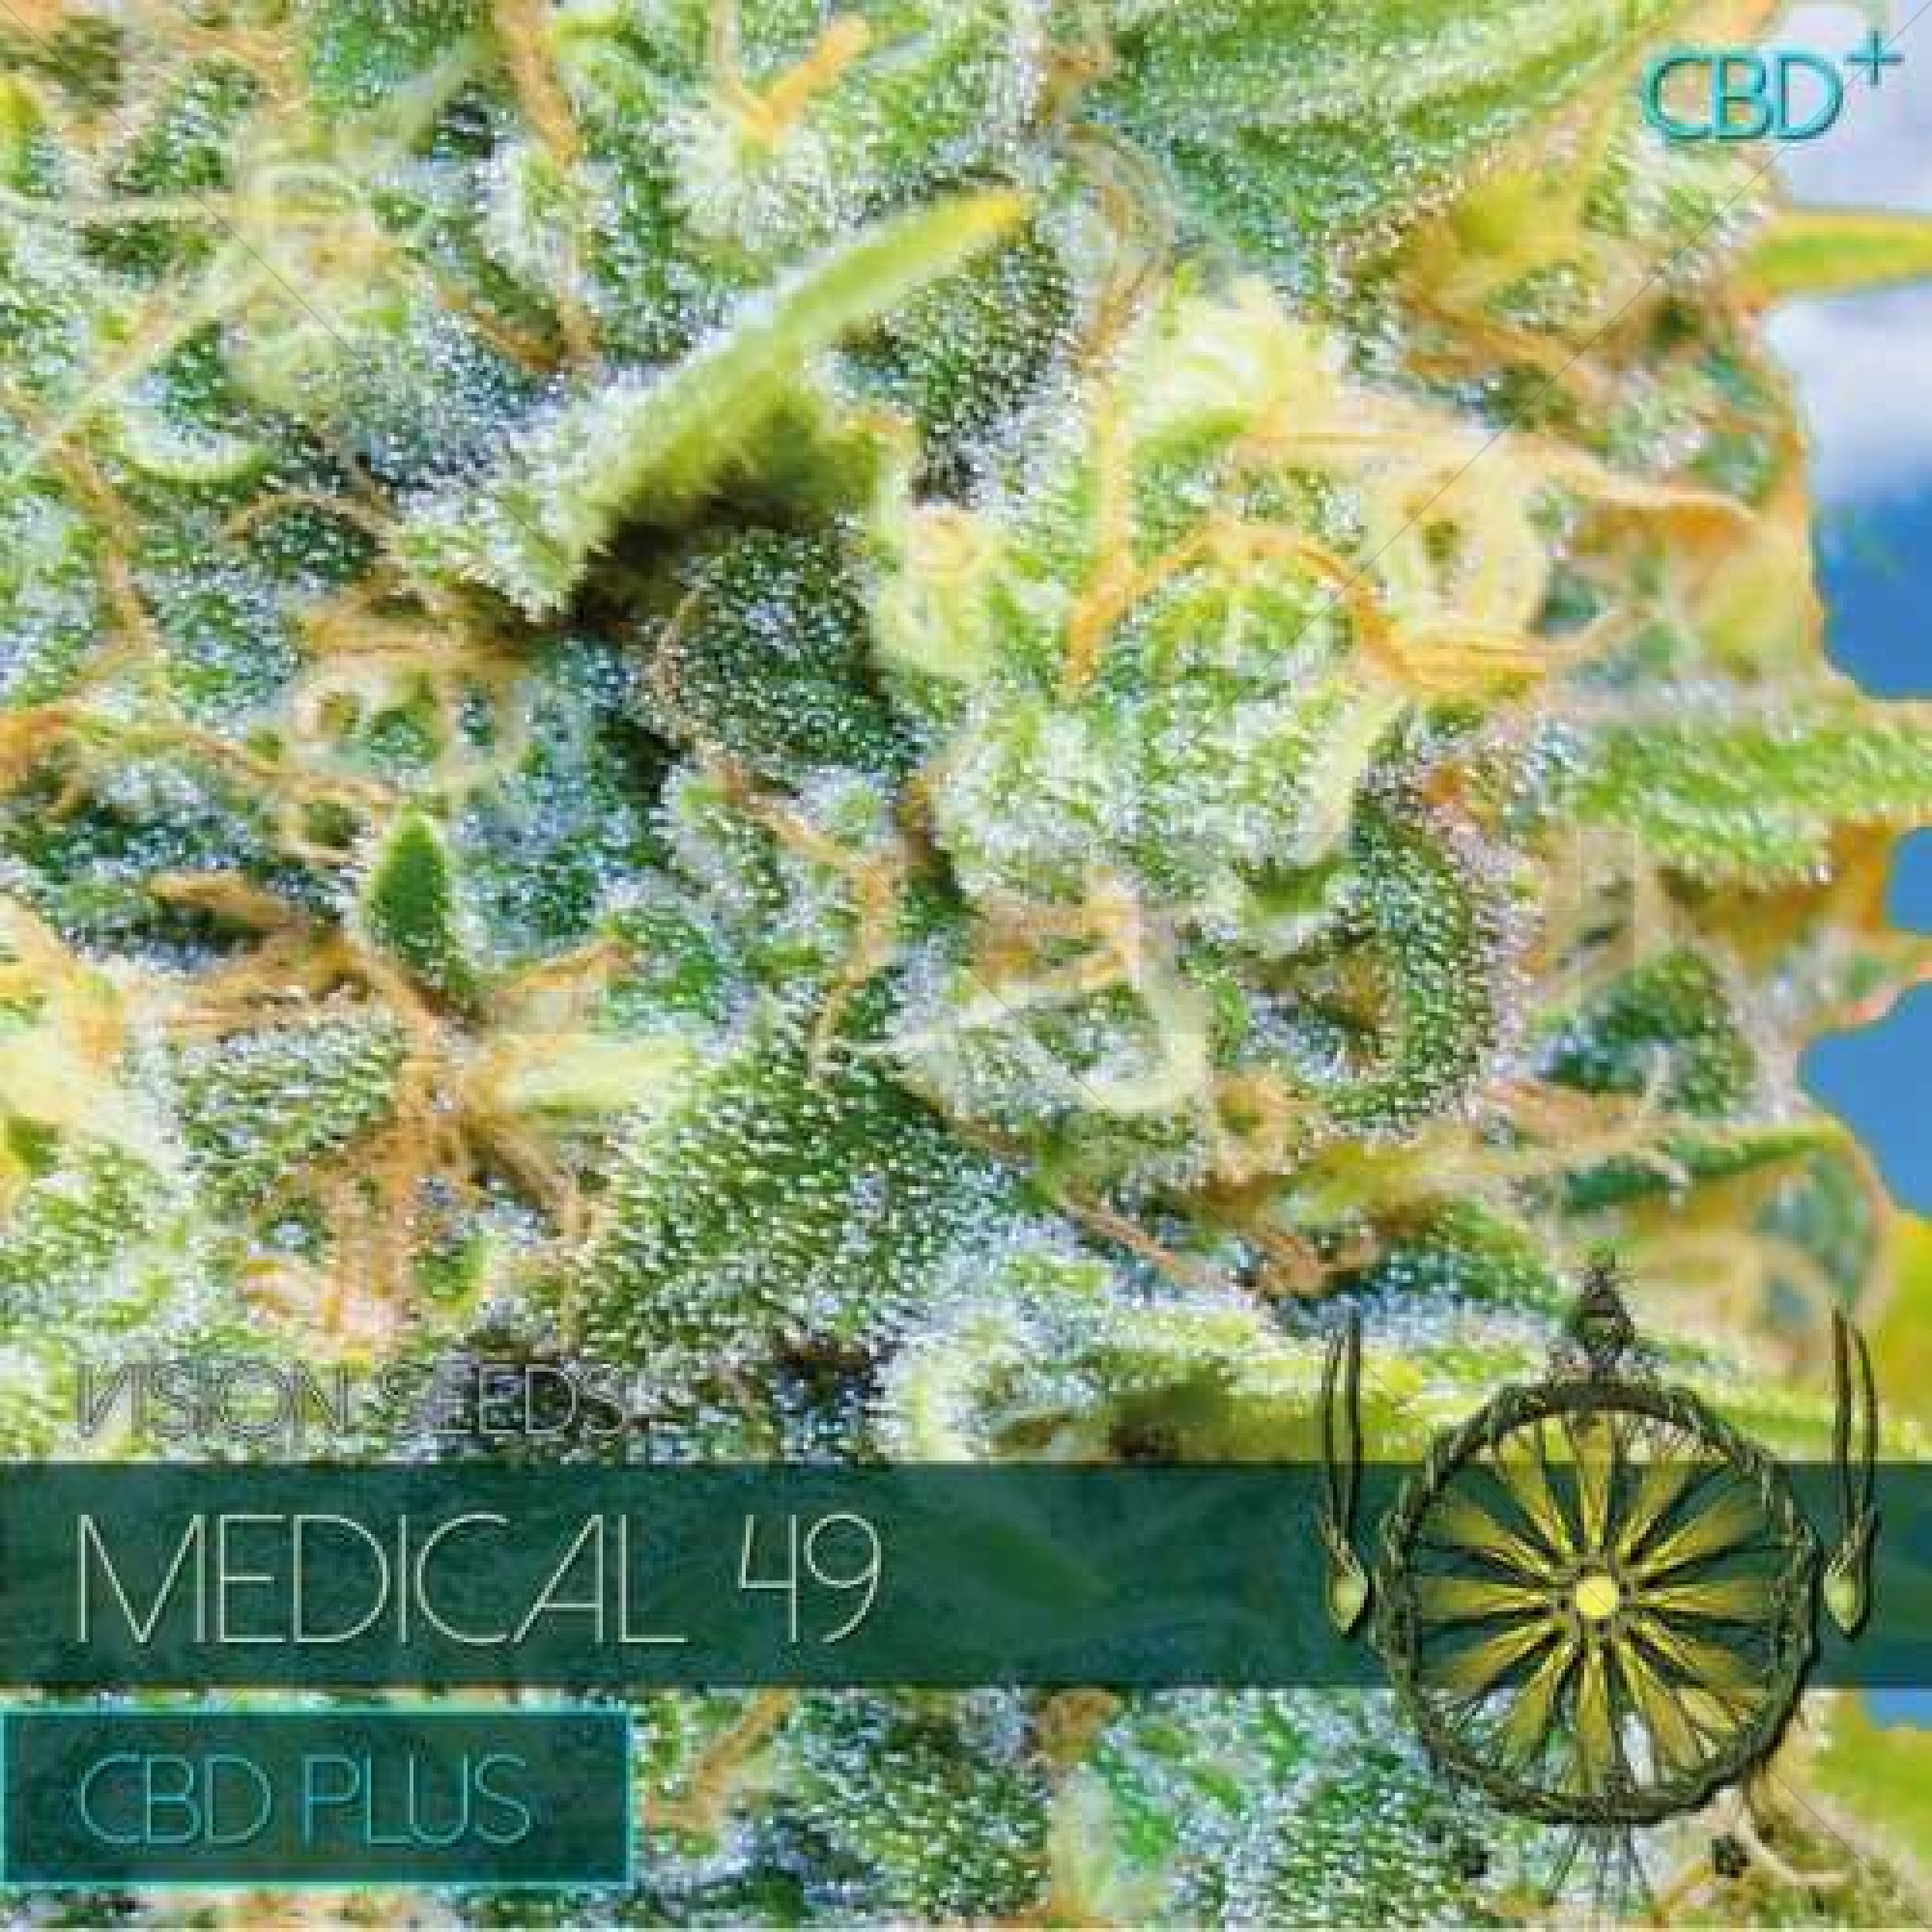 Medical 49 CBD+ (Vision Seeds) - 3 Seeds